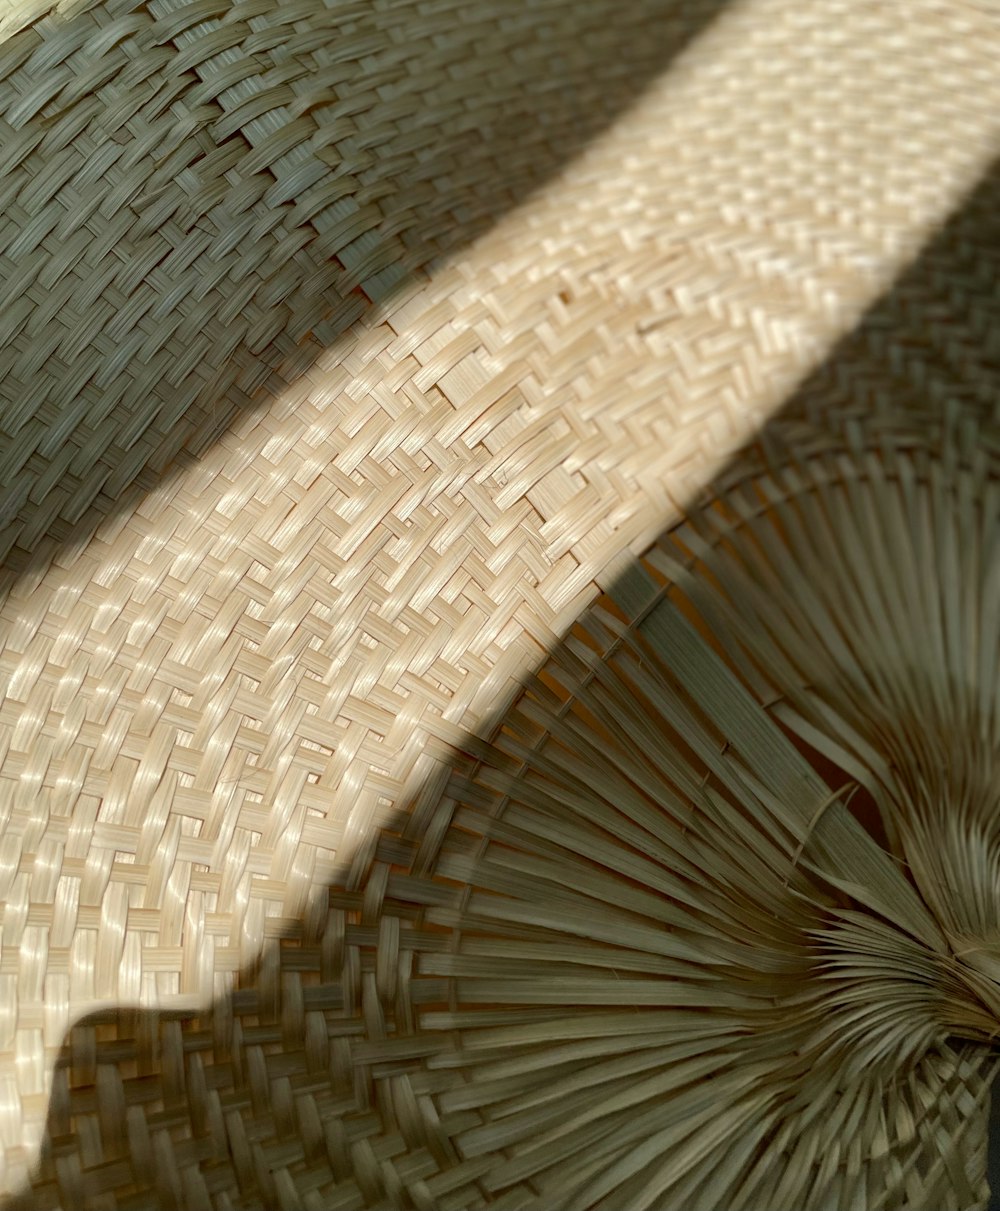 a close up view of a straw umbrella